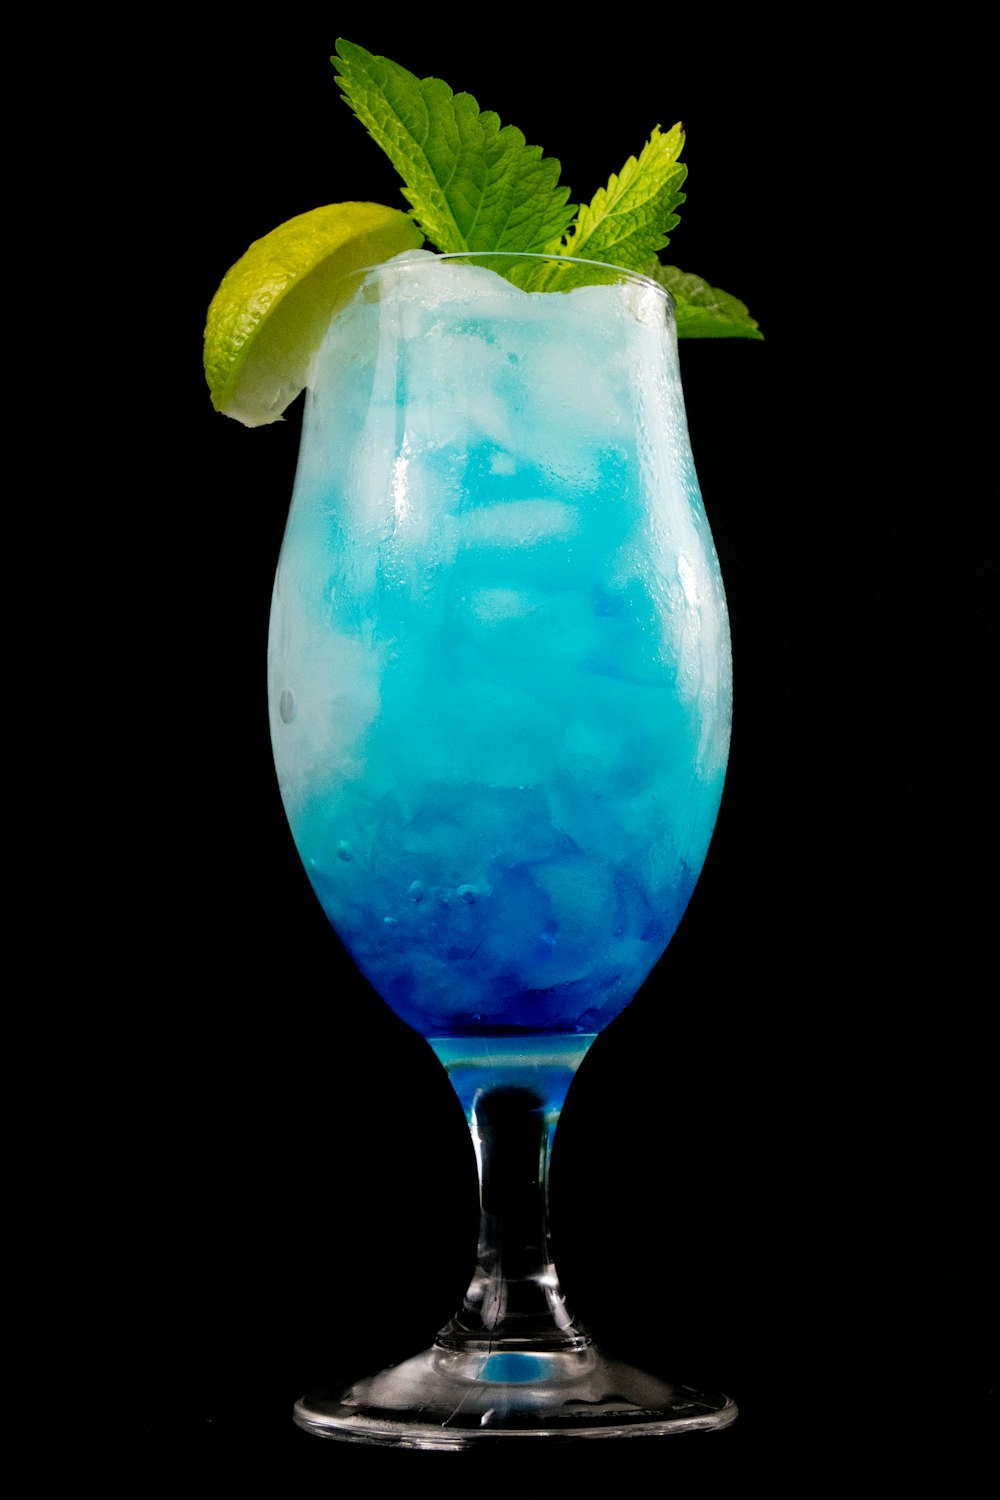 Liquide bleu dans un verre transparent avec des tranches de citron